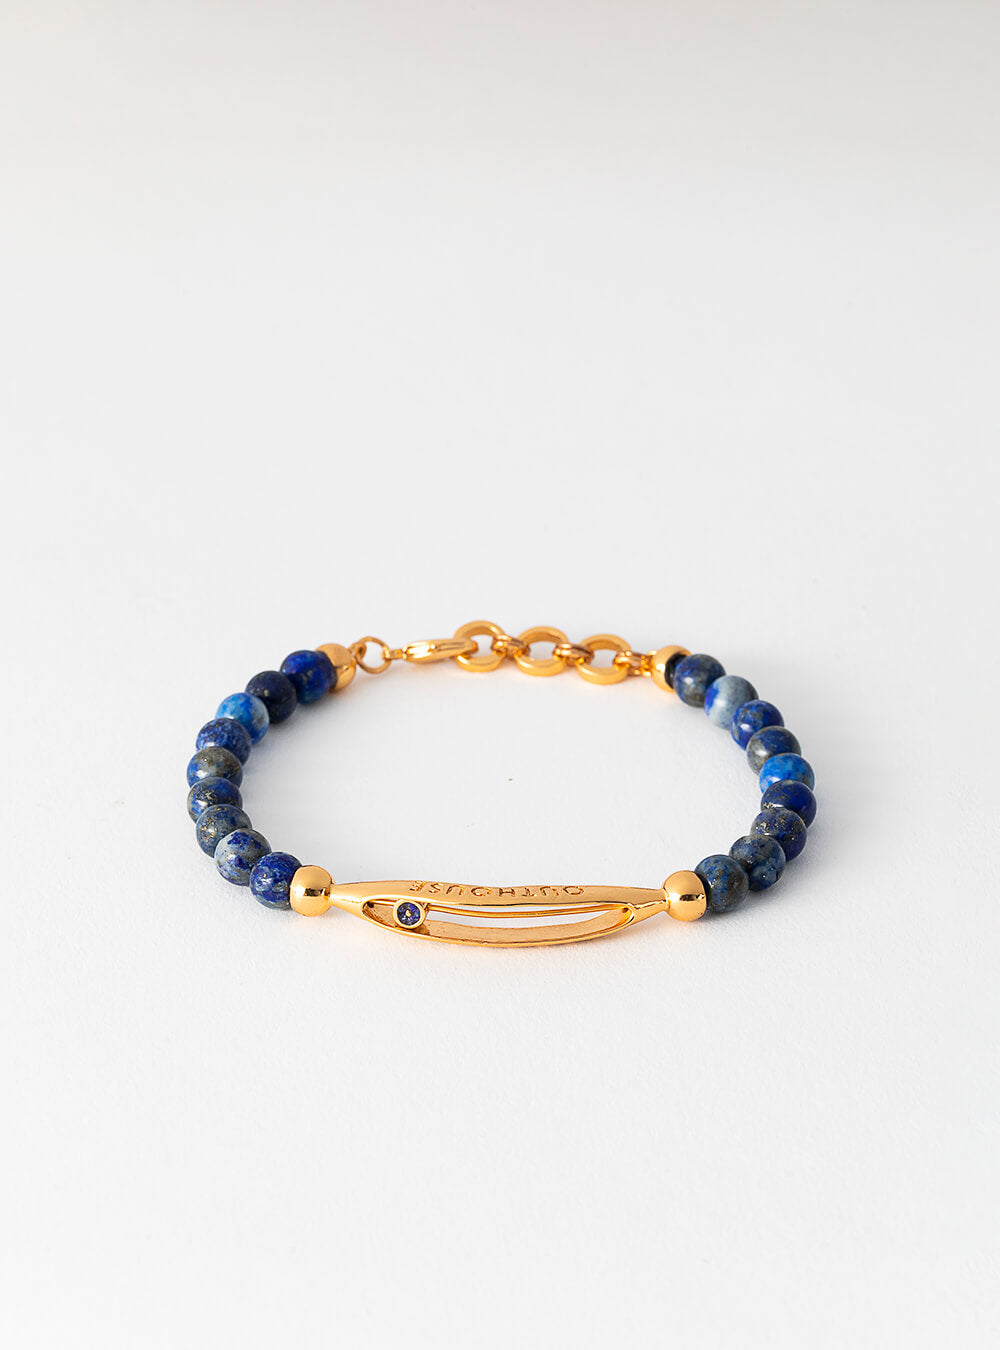 Lapis Lazuli Bracelet-4mm Lapis Beads-Adjustable – Kathy Bankston